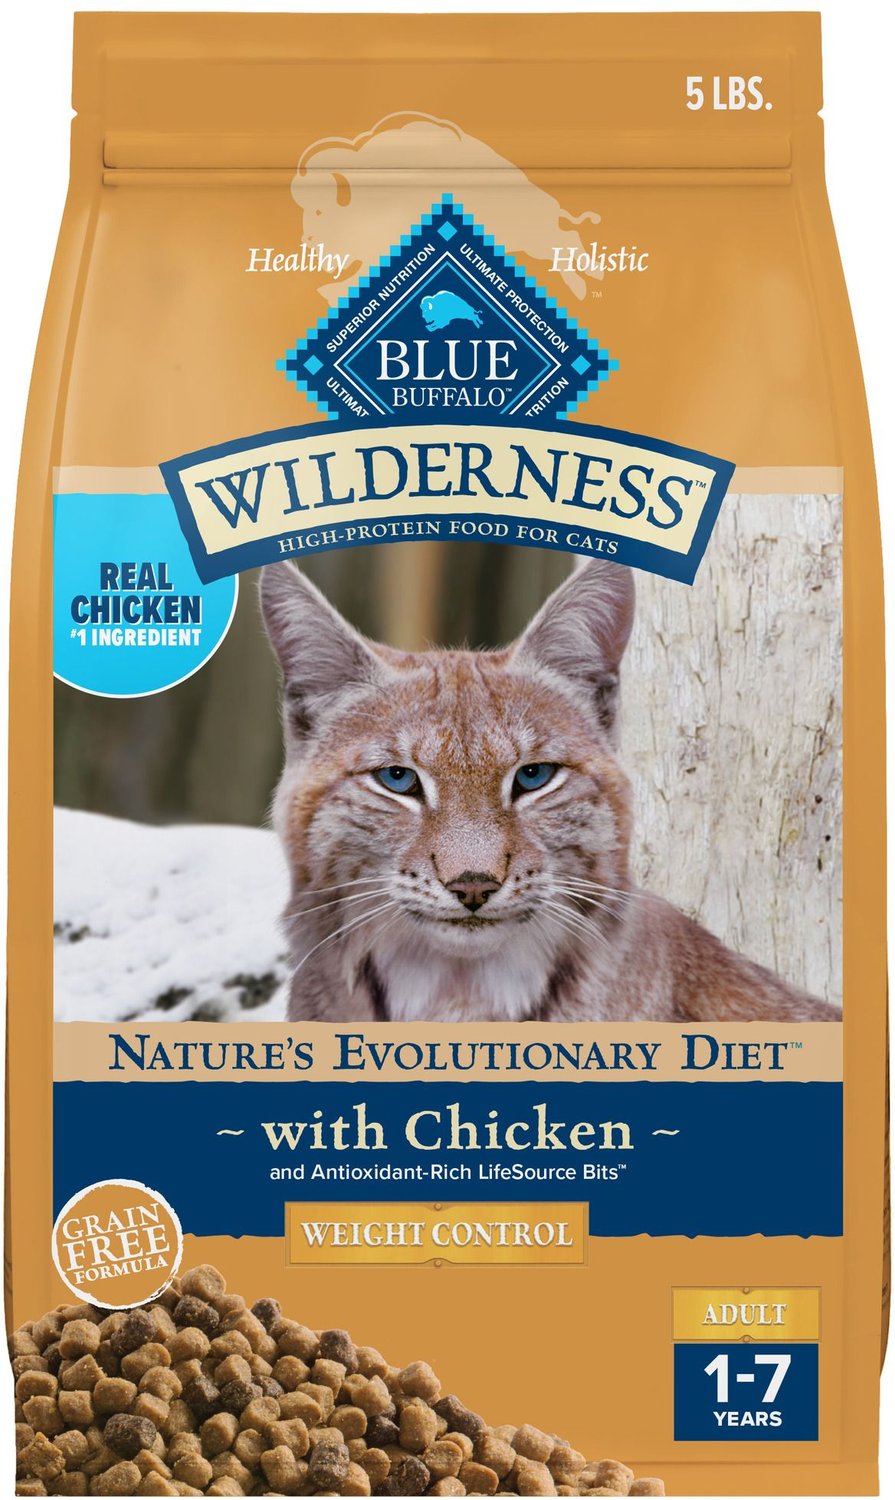 Blue Buffalo Wet Cat Food Rating